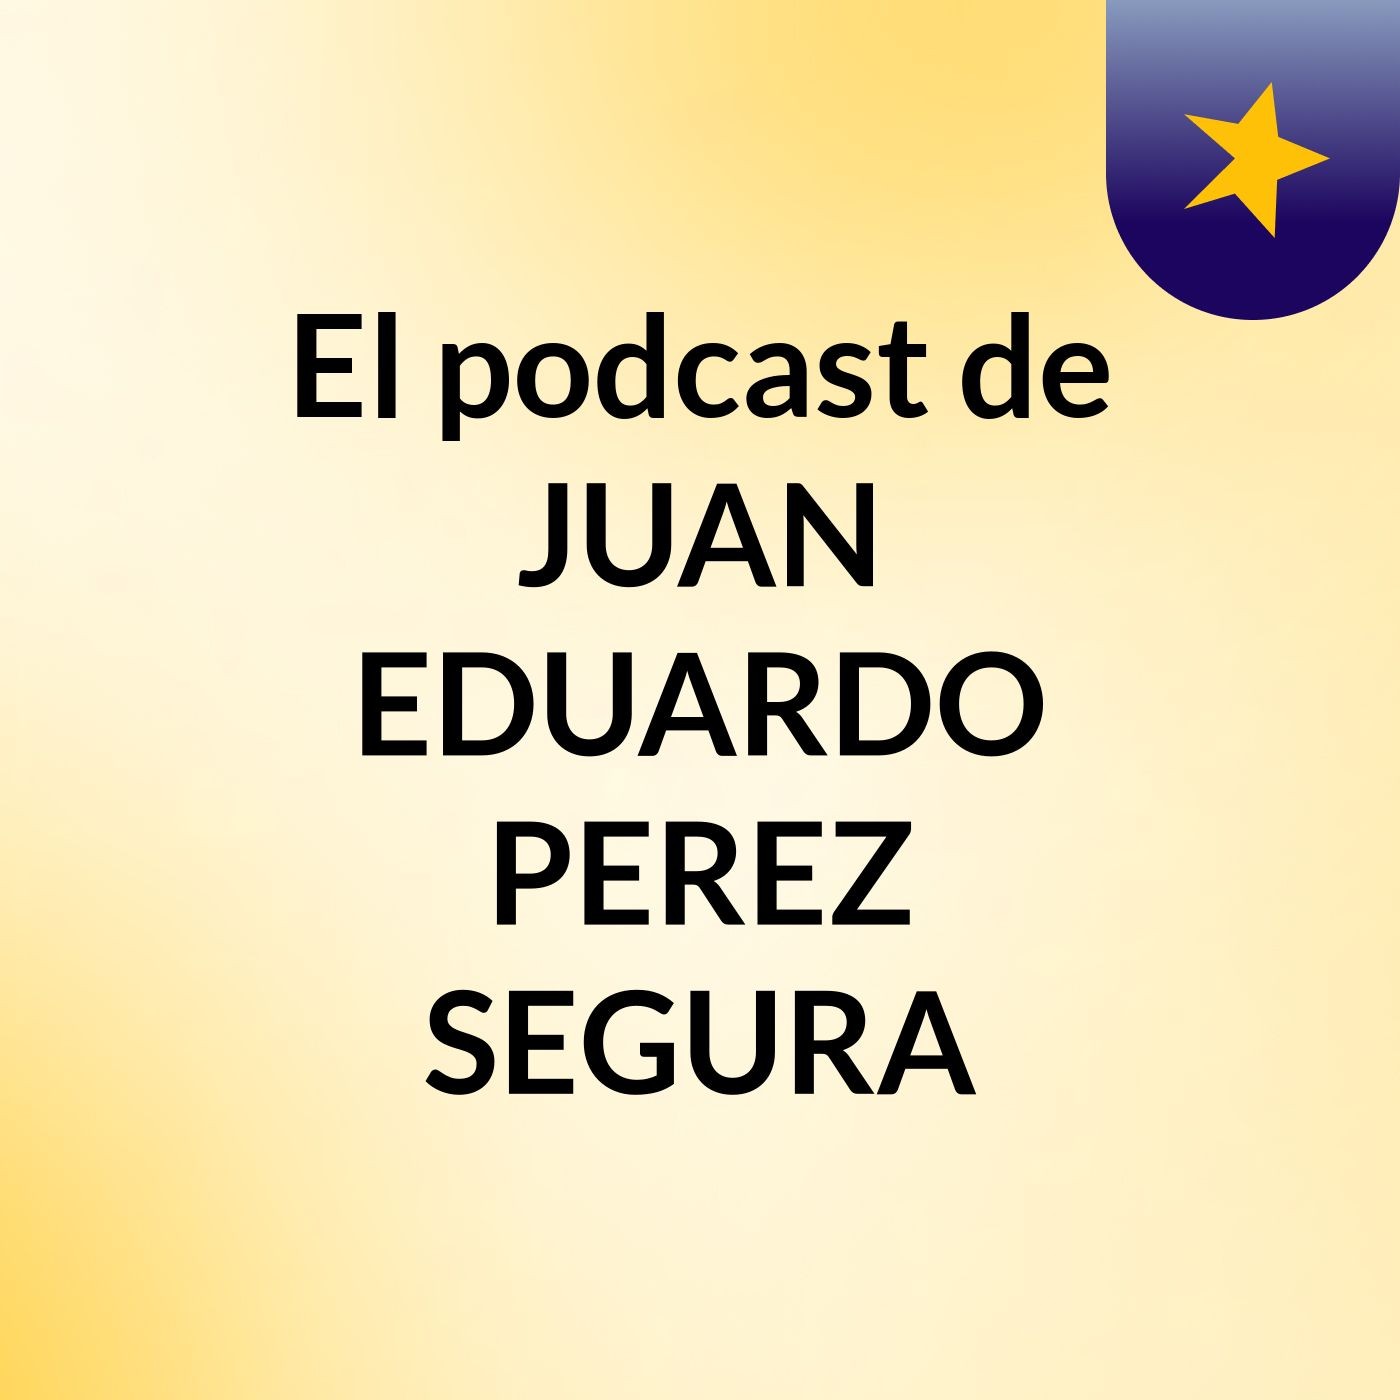 El podcast de JUAN EDUARDO PEREZ SEGURA